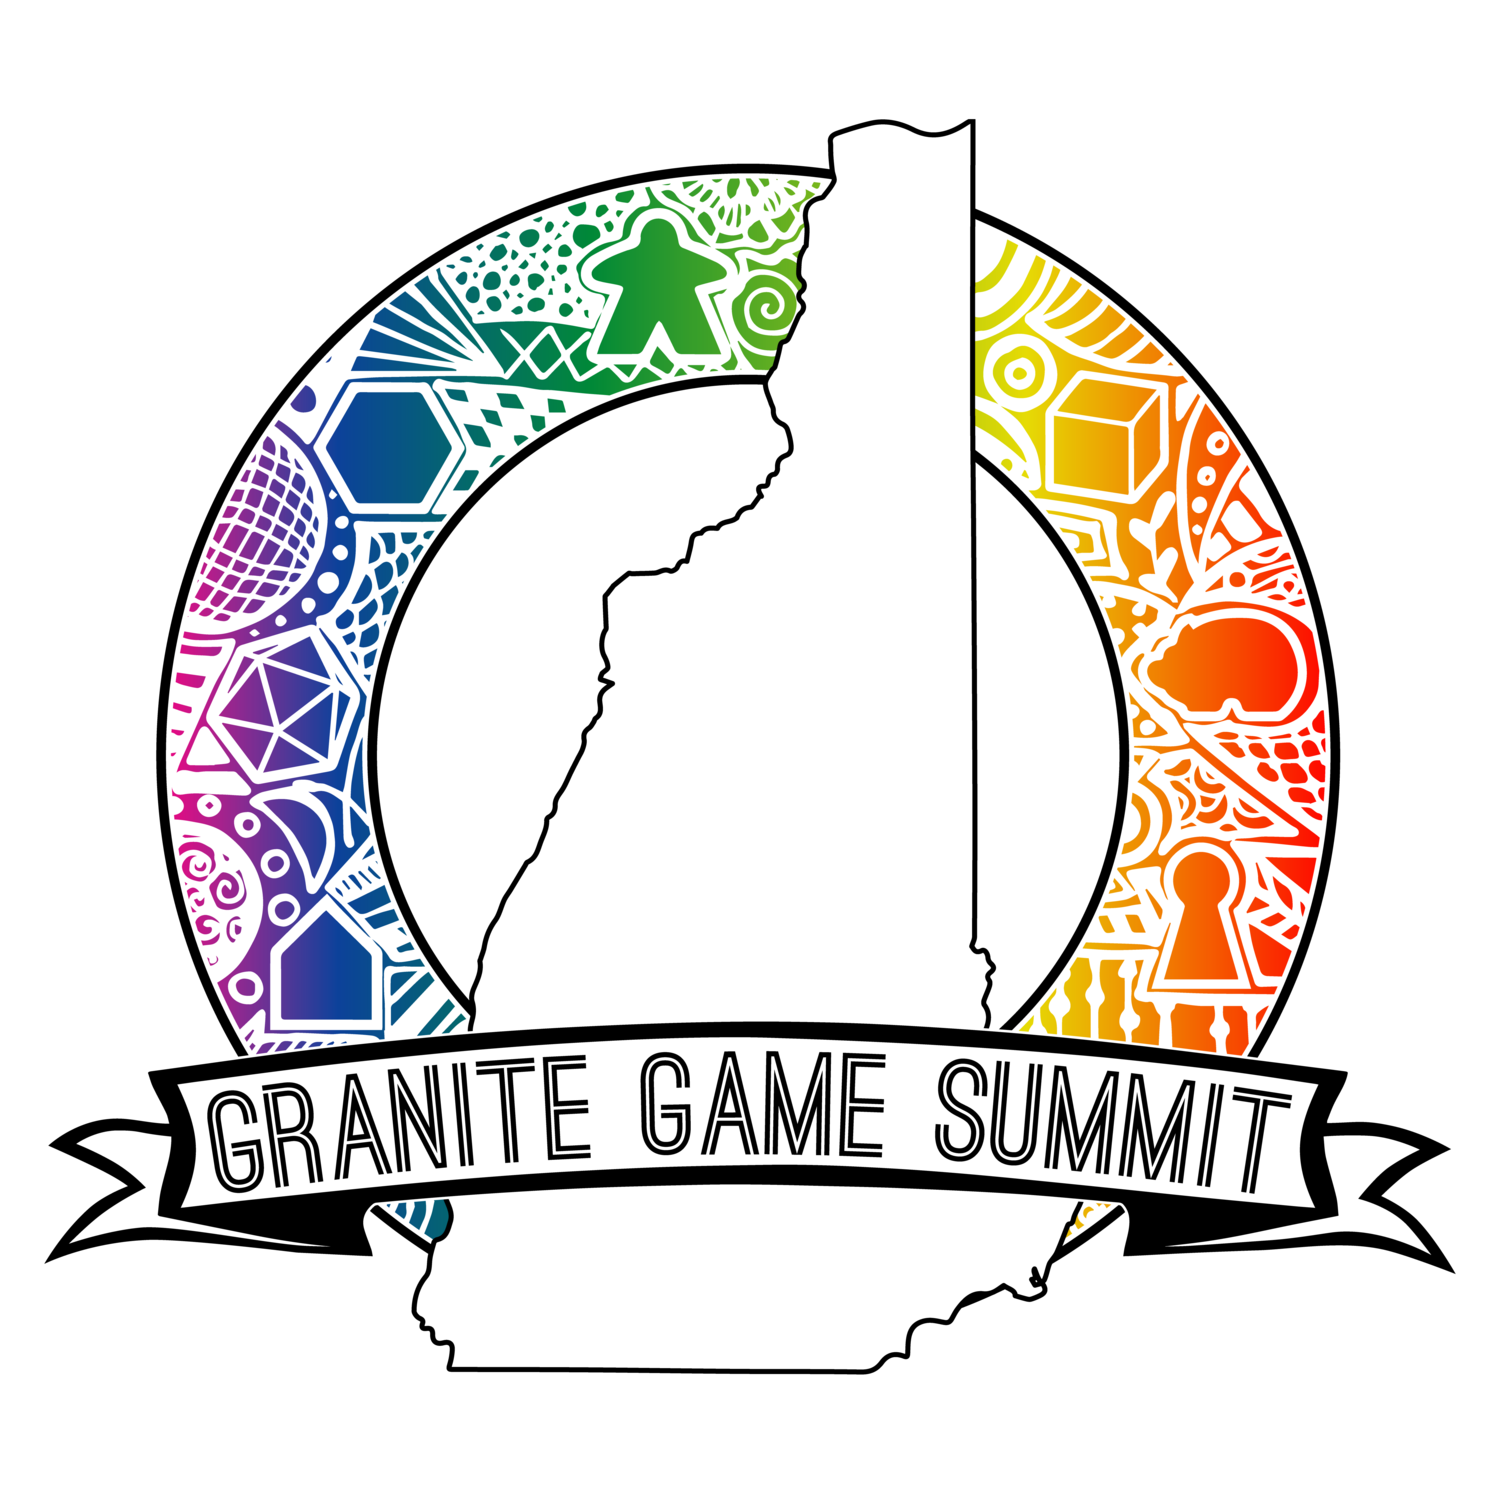 Granite Game Summit